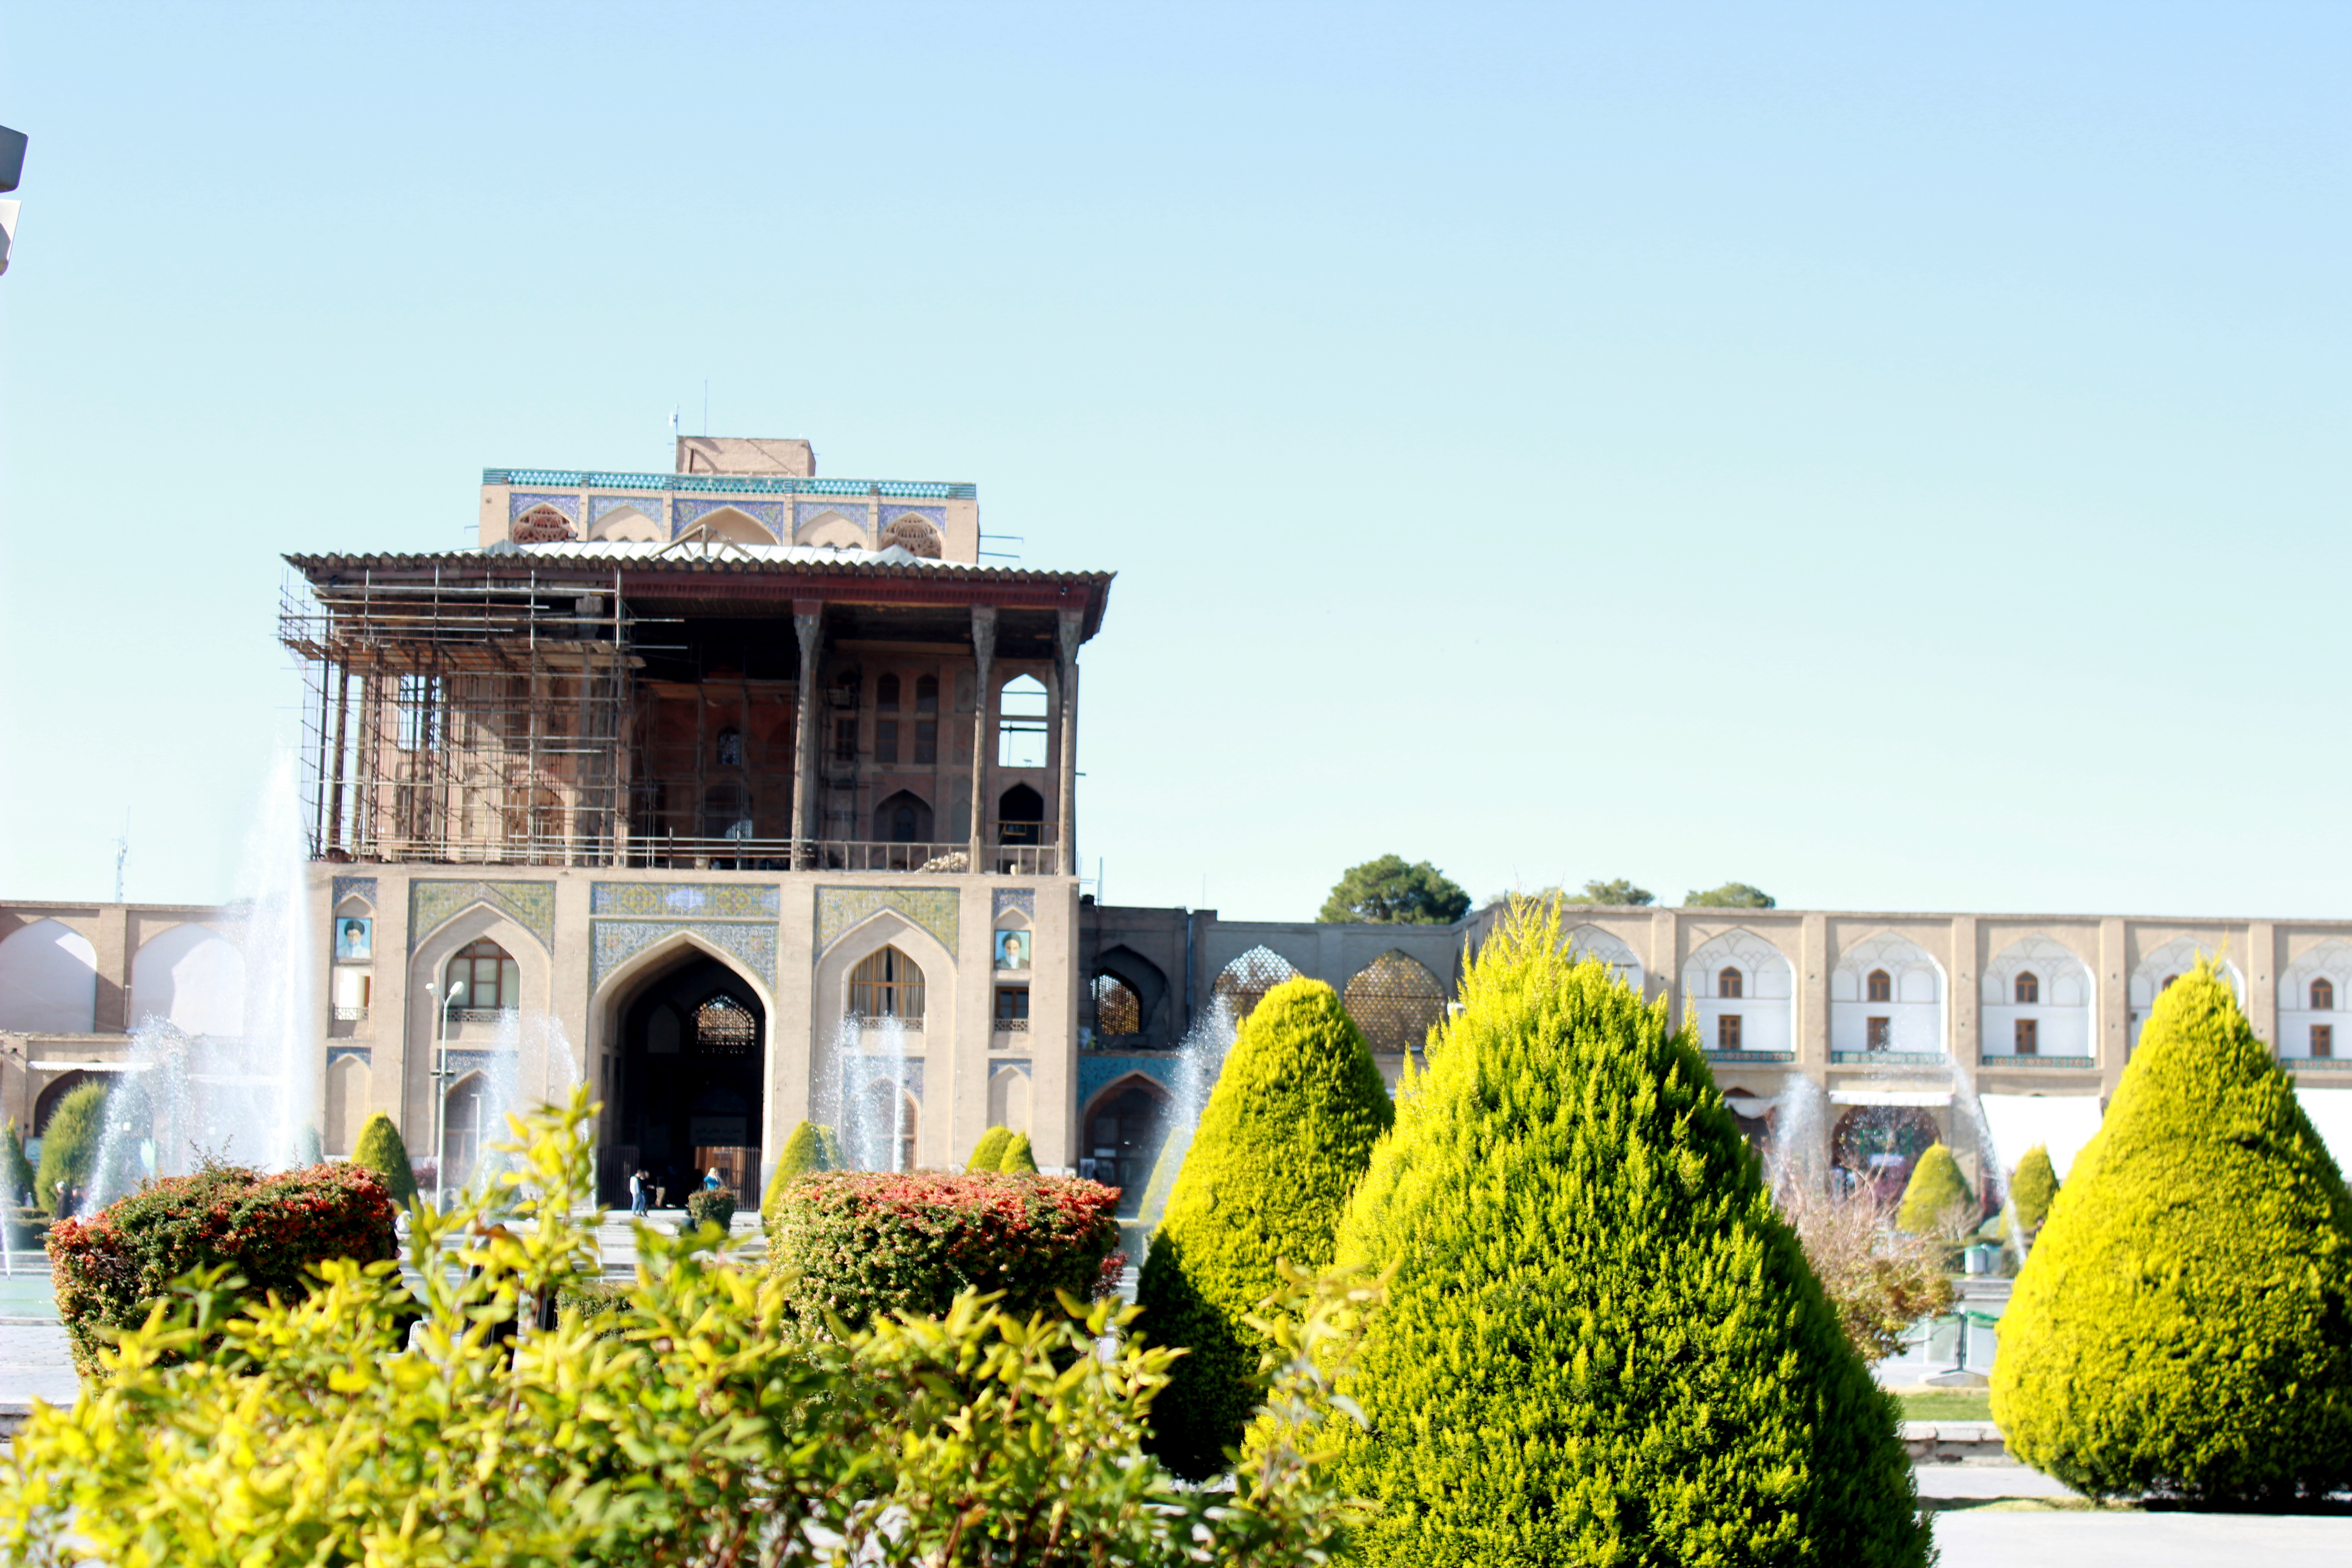 File:کاخ عالی قاپو اصفهان (4).JPG - Wikimedia Commons